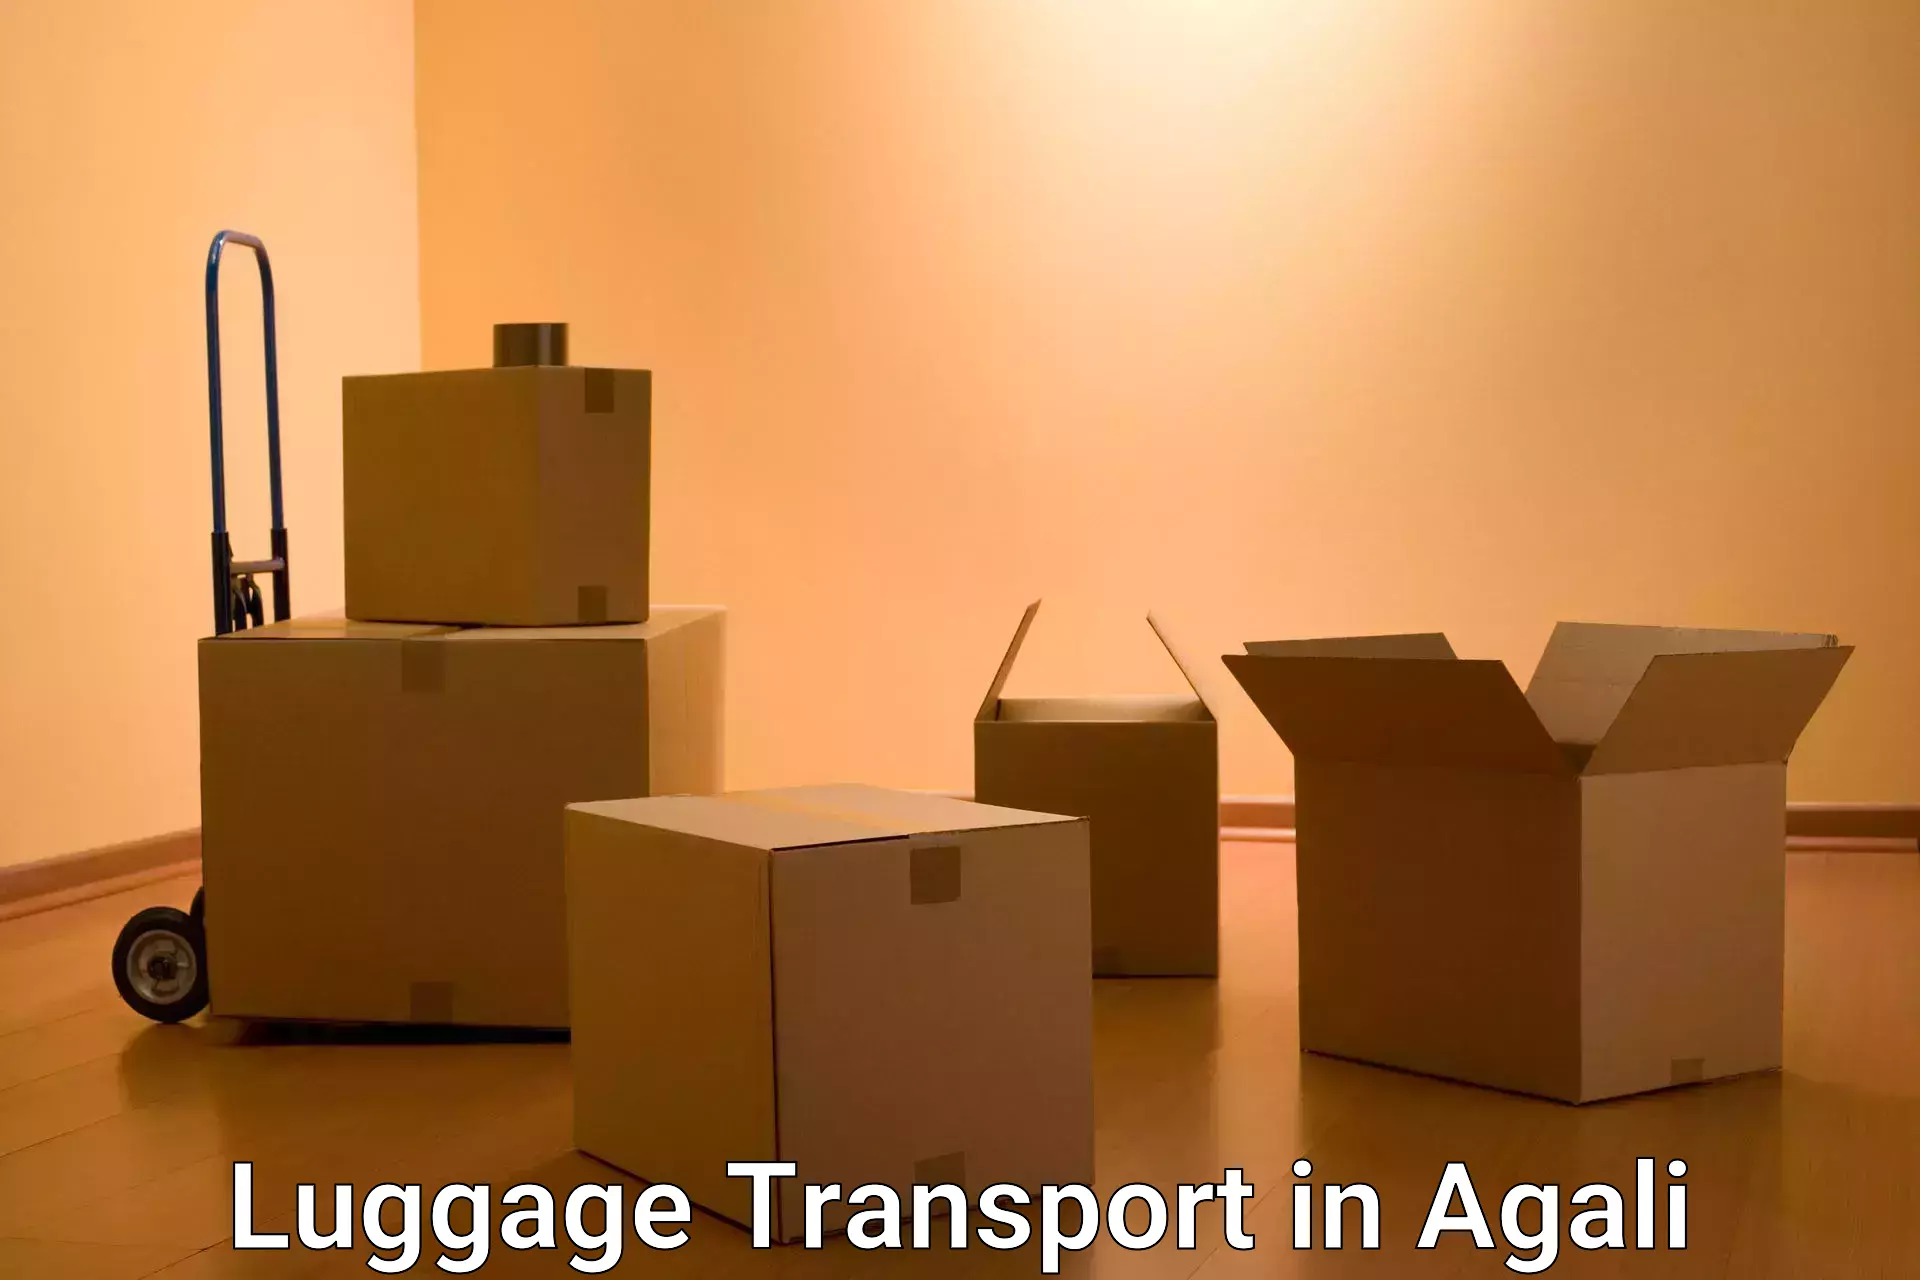 Urgent luggage shipment in Agali